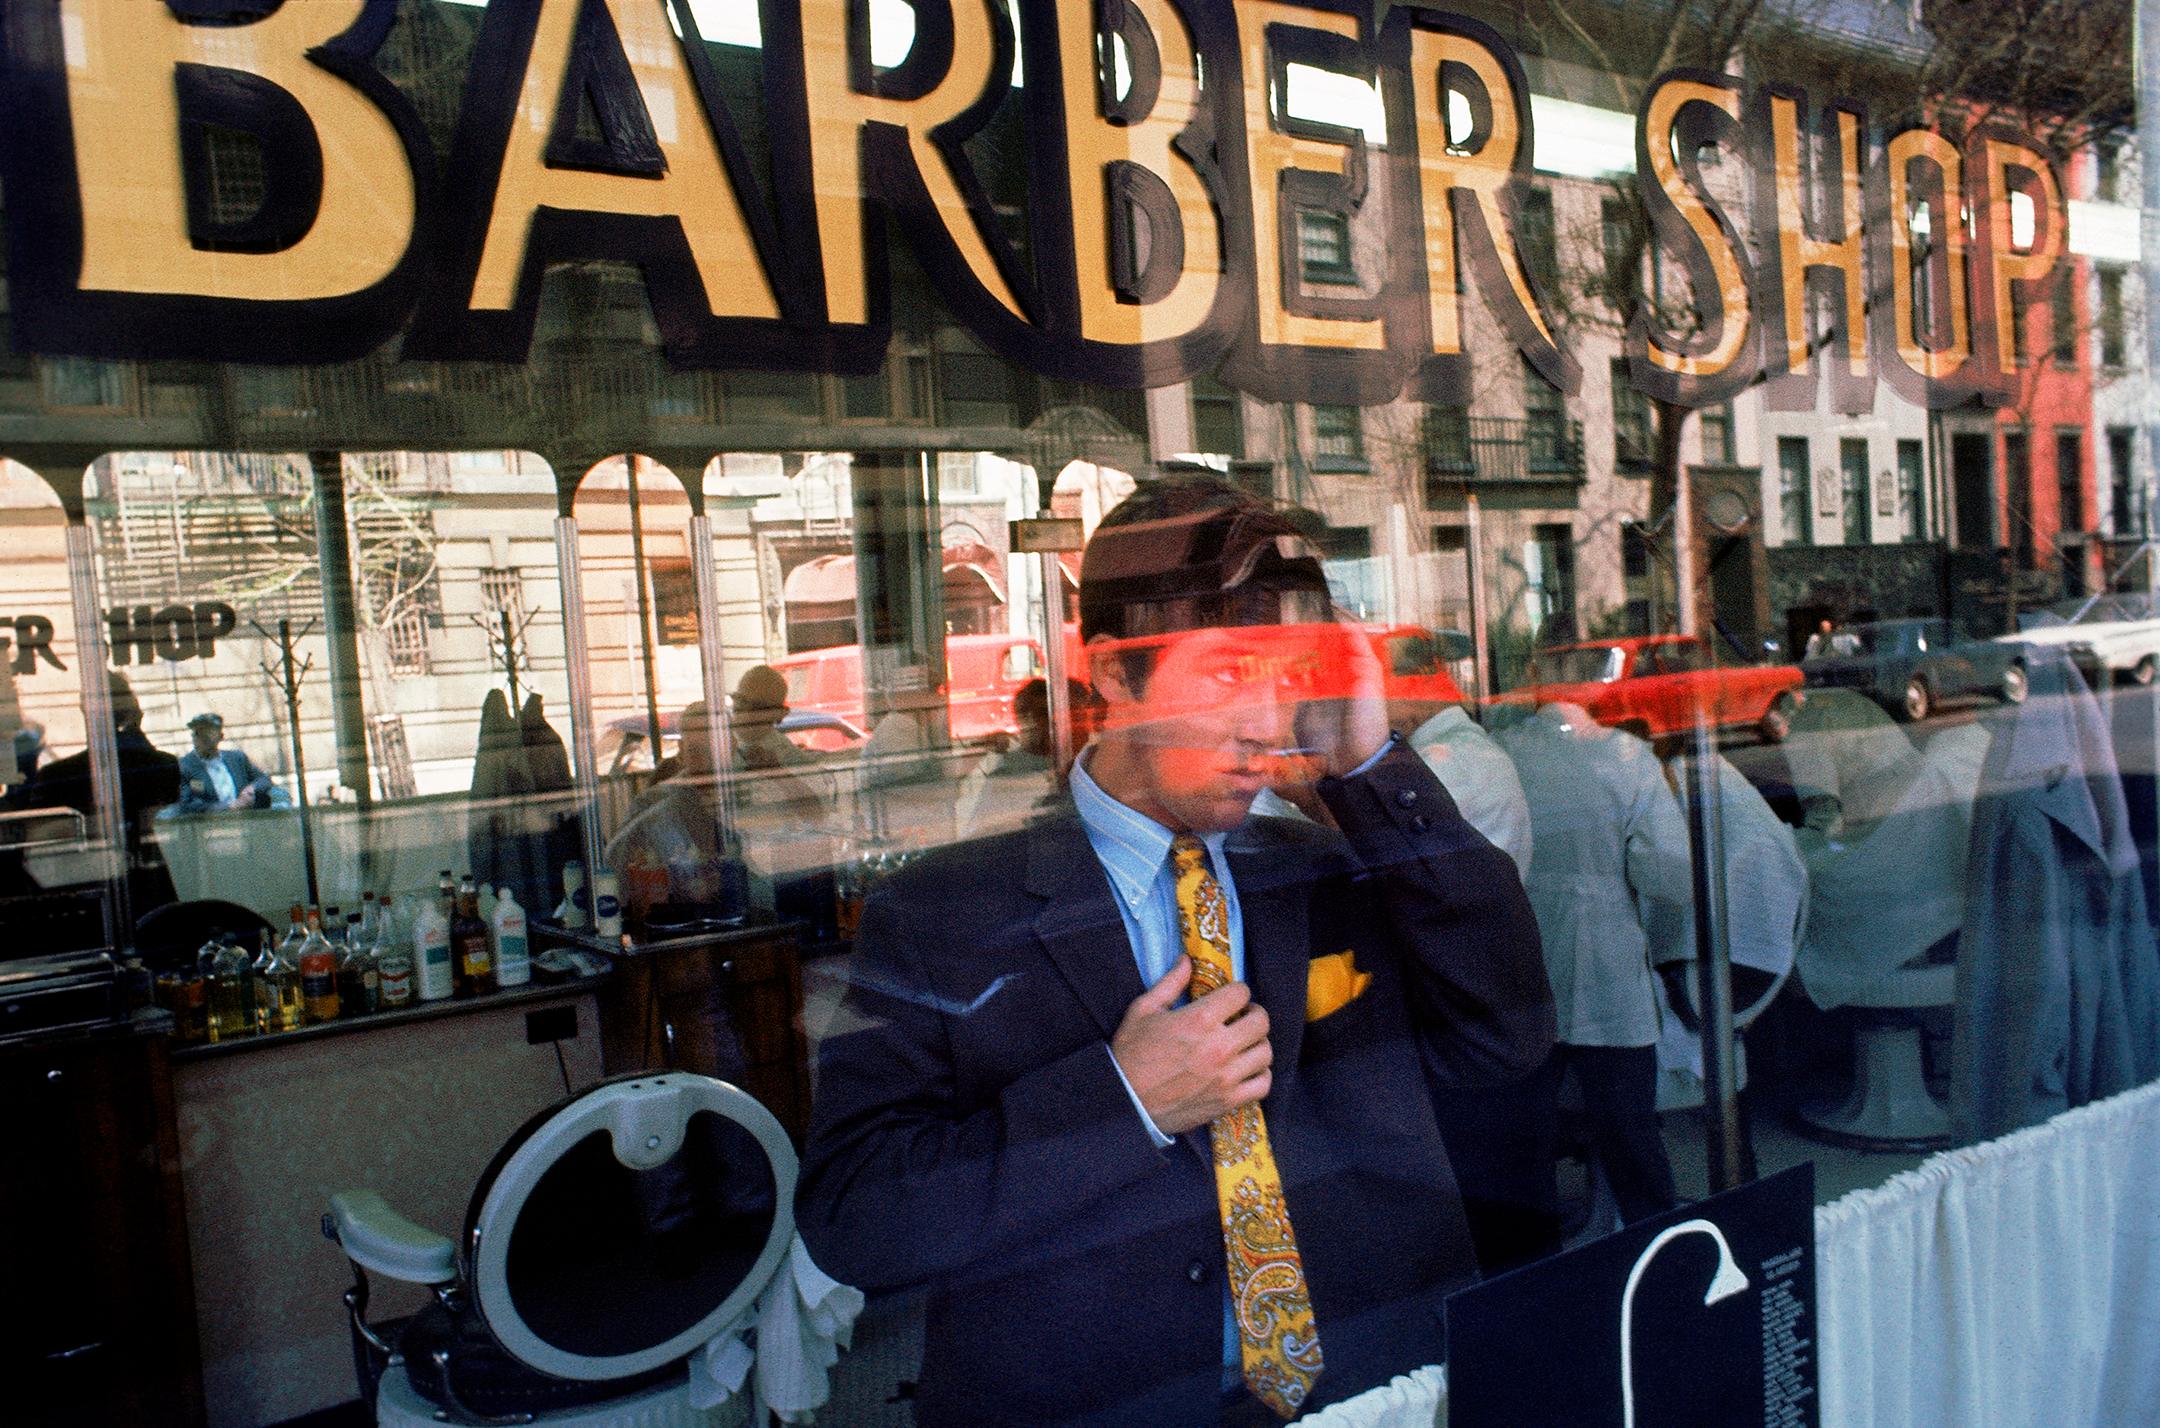 Barber Shop Reflexion